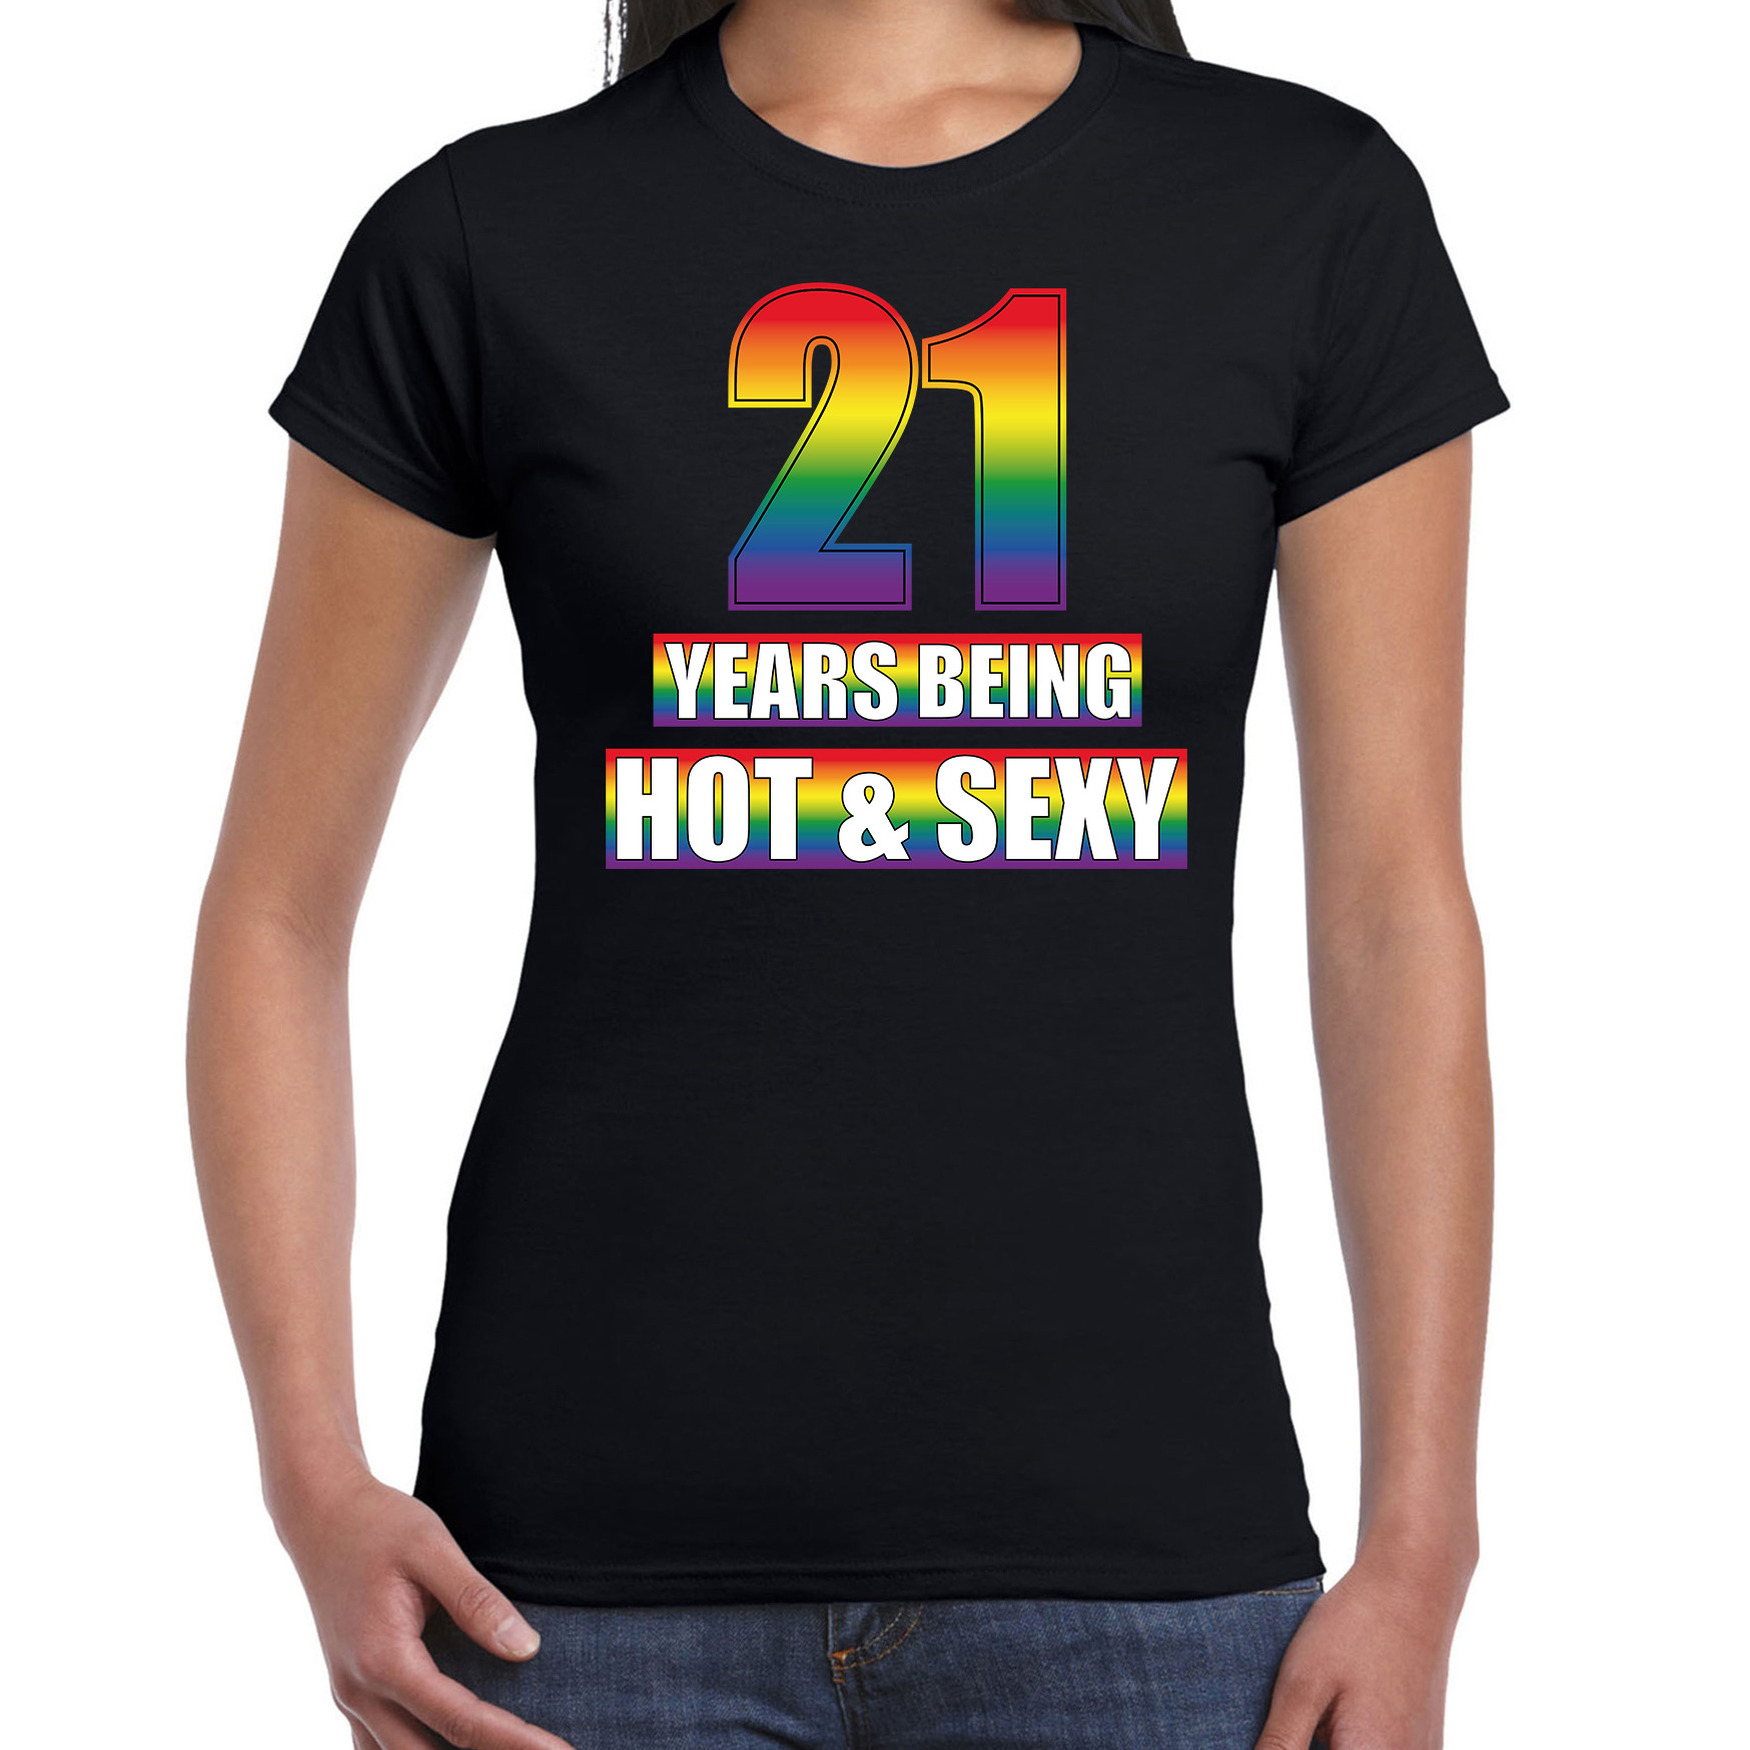 Hot en sexy 21 jaar verjaardag cadeau t-shirt zwart voor dames Gay- LHBT kleding-outfit